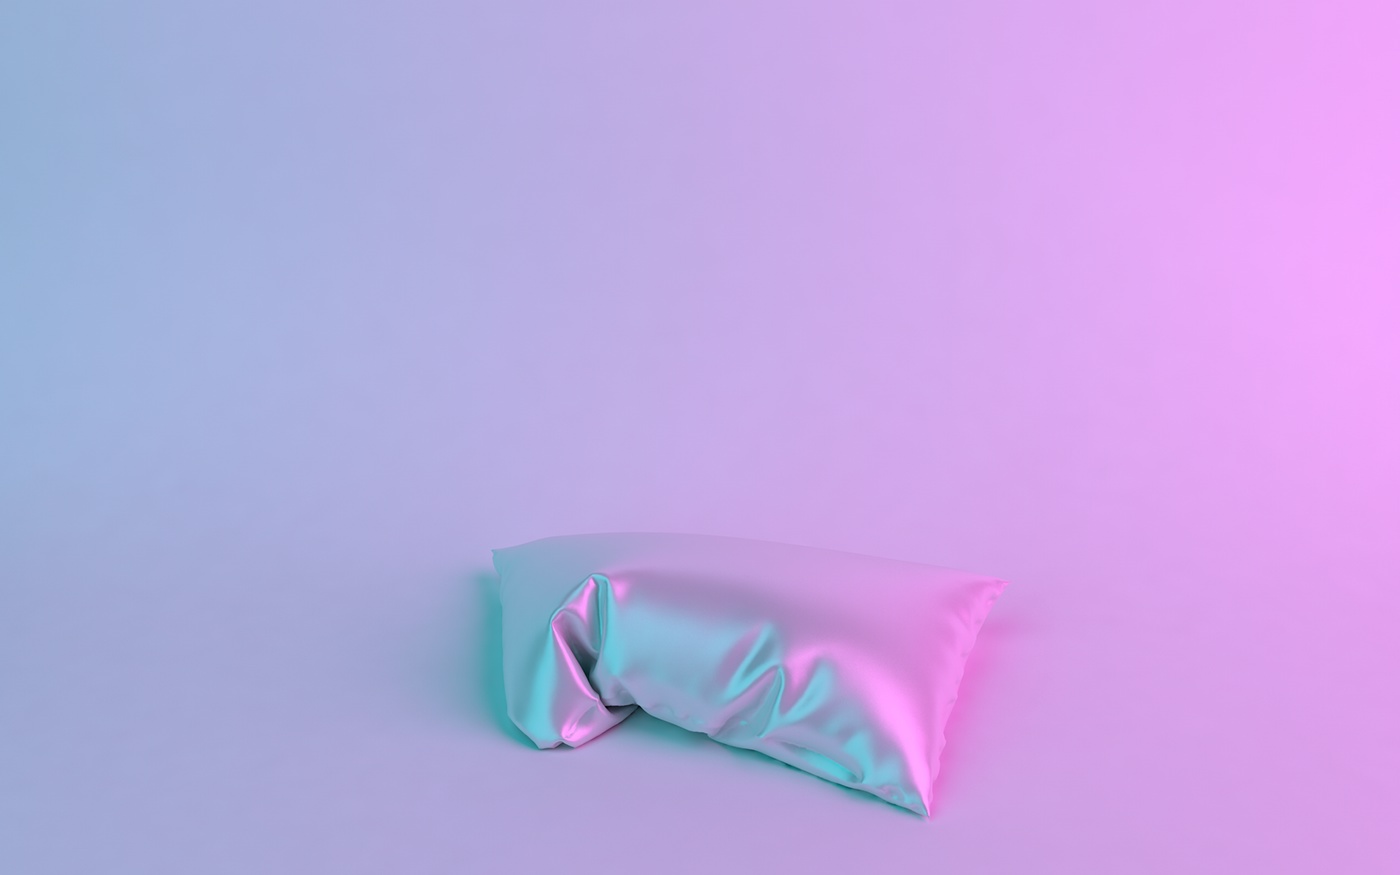 objects colors Bin pillow pink blu vaporwave